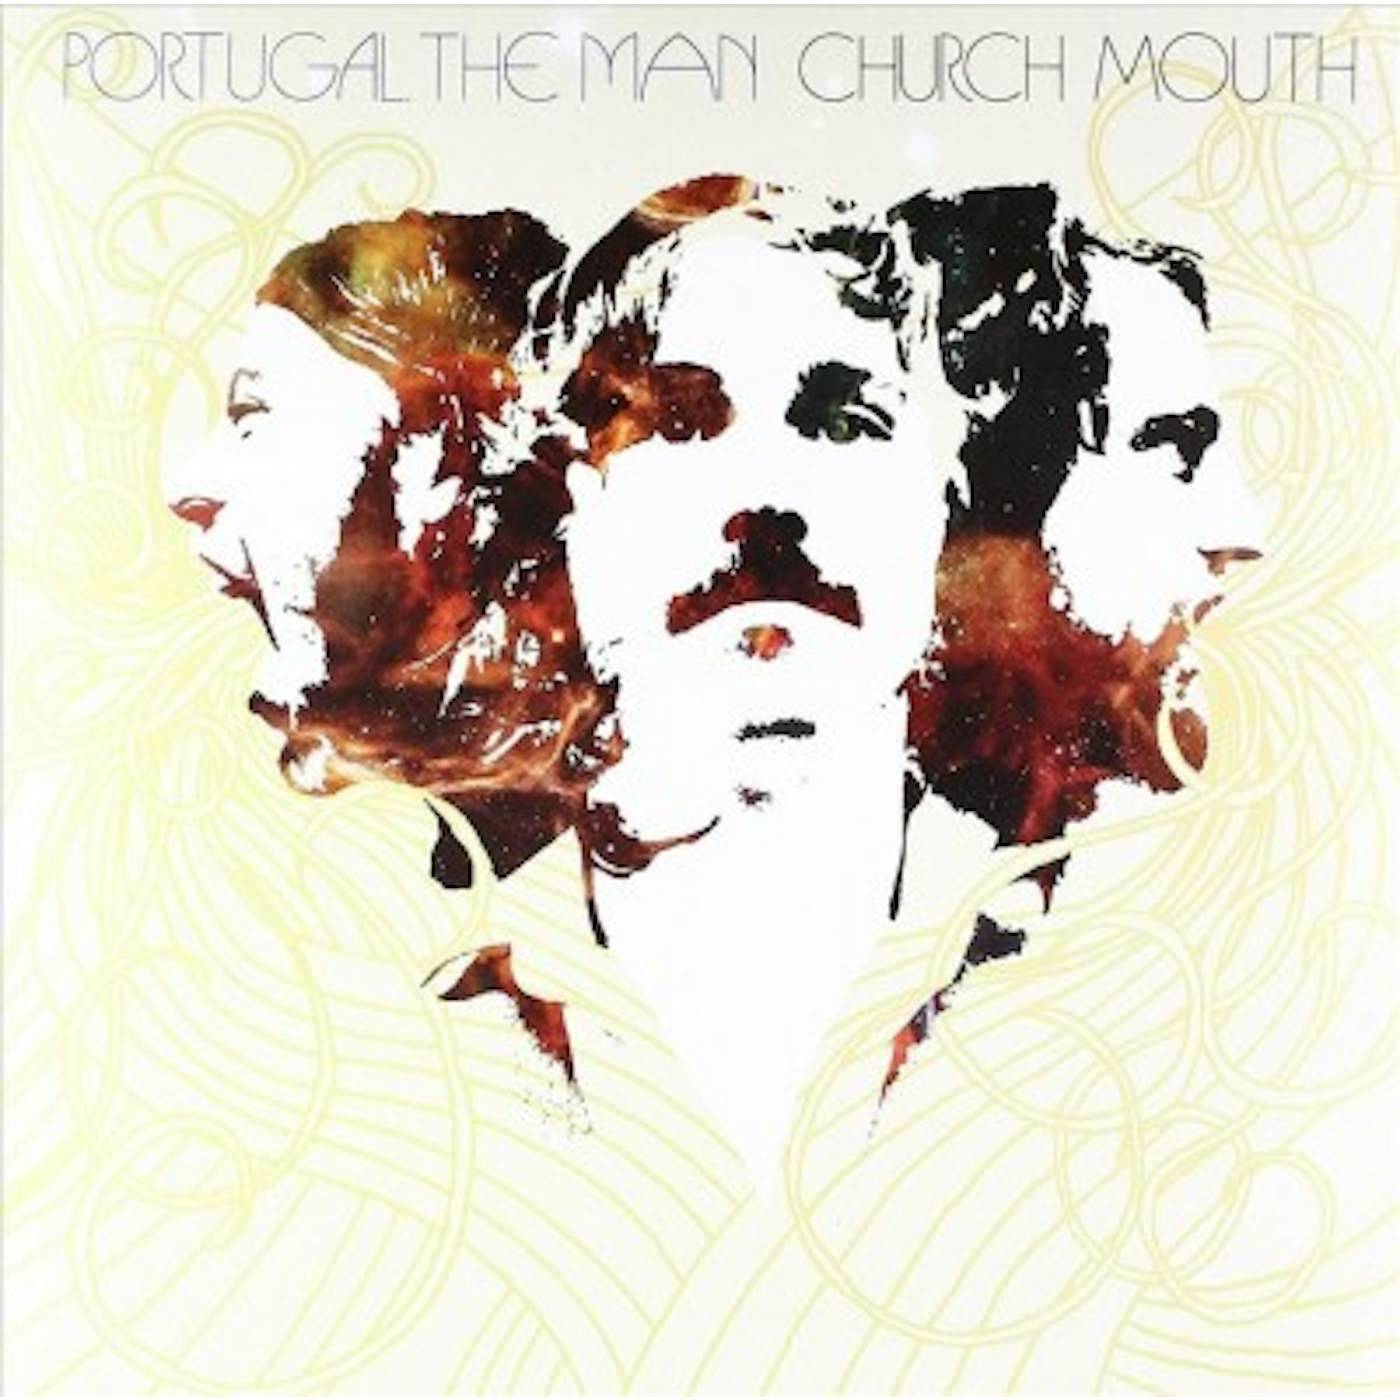 Portugal. The Man Church Mouth Vinyl Record